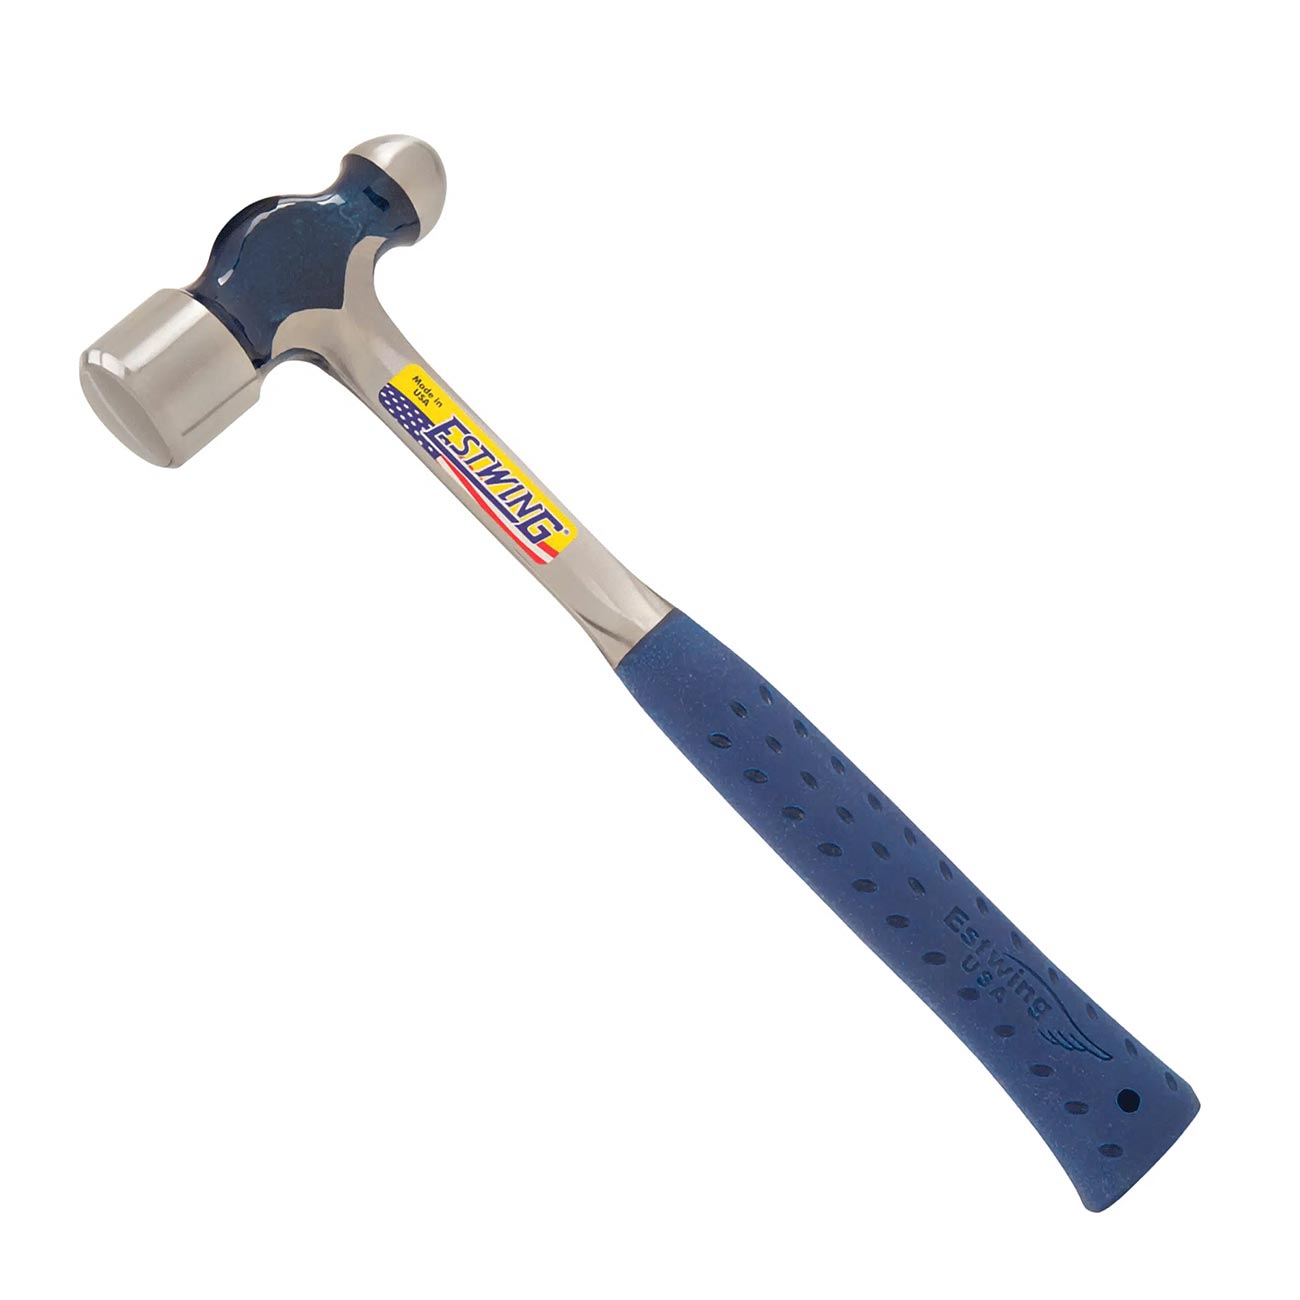 Estwing 16 oz. Ballpeen Hammer with Blue Shock Reduction Grip